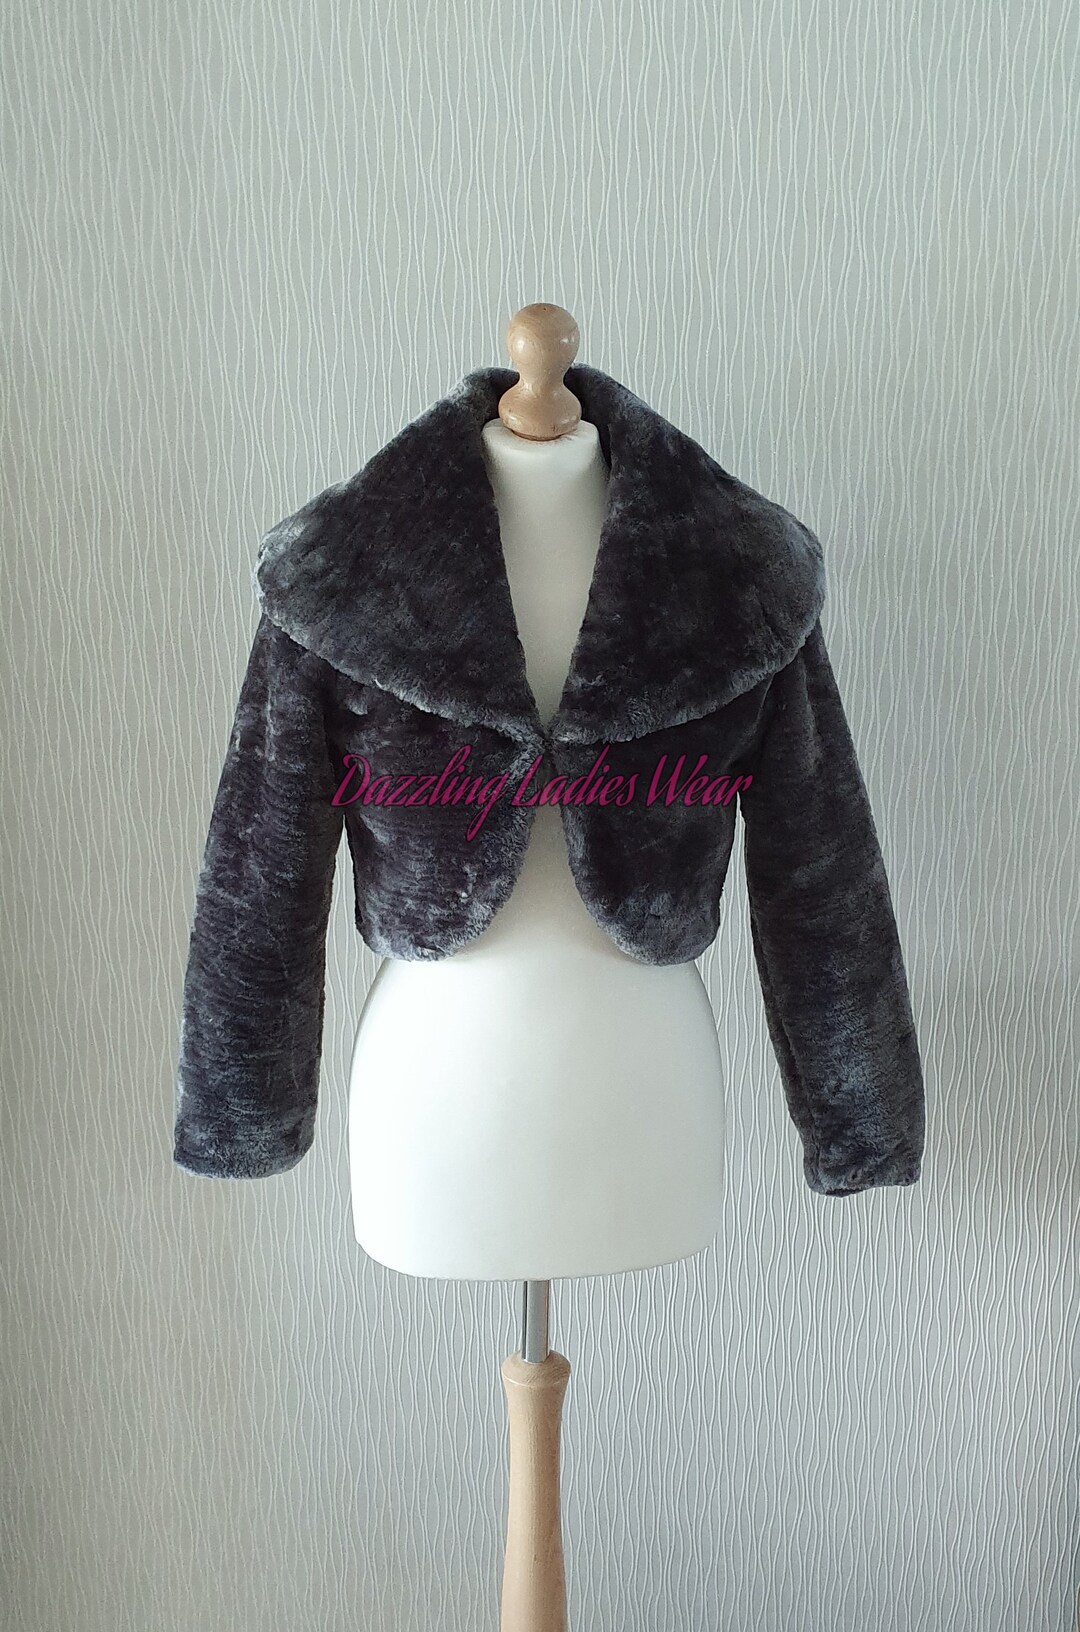 Dark Grey Long Sleeved Faux Fur Bolero Large Collar / Shrug / Jacket ...